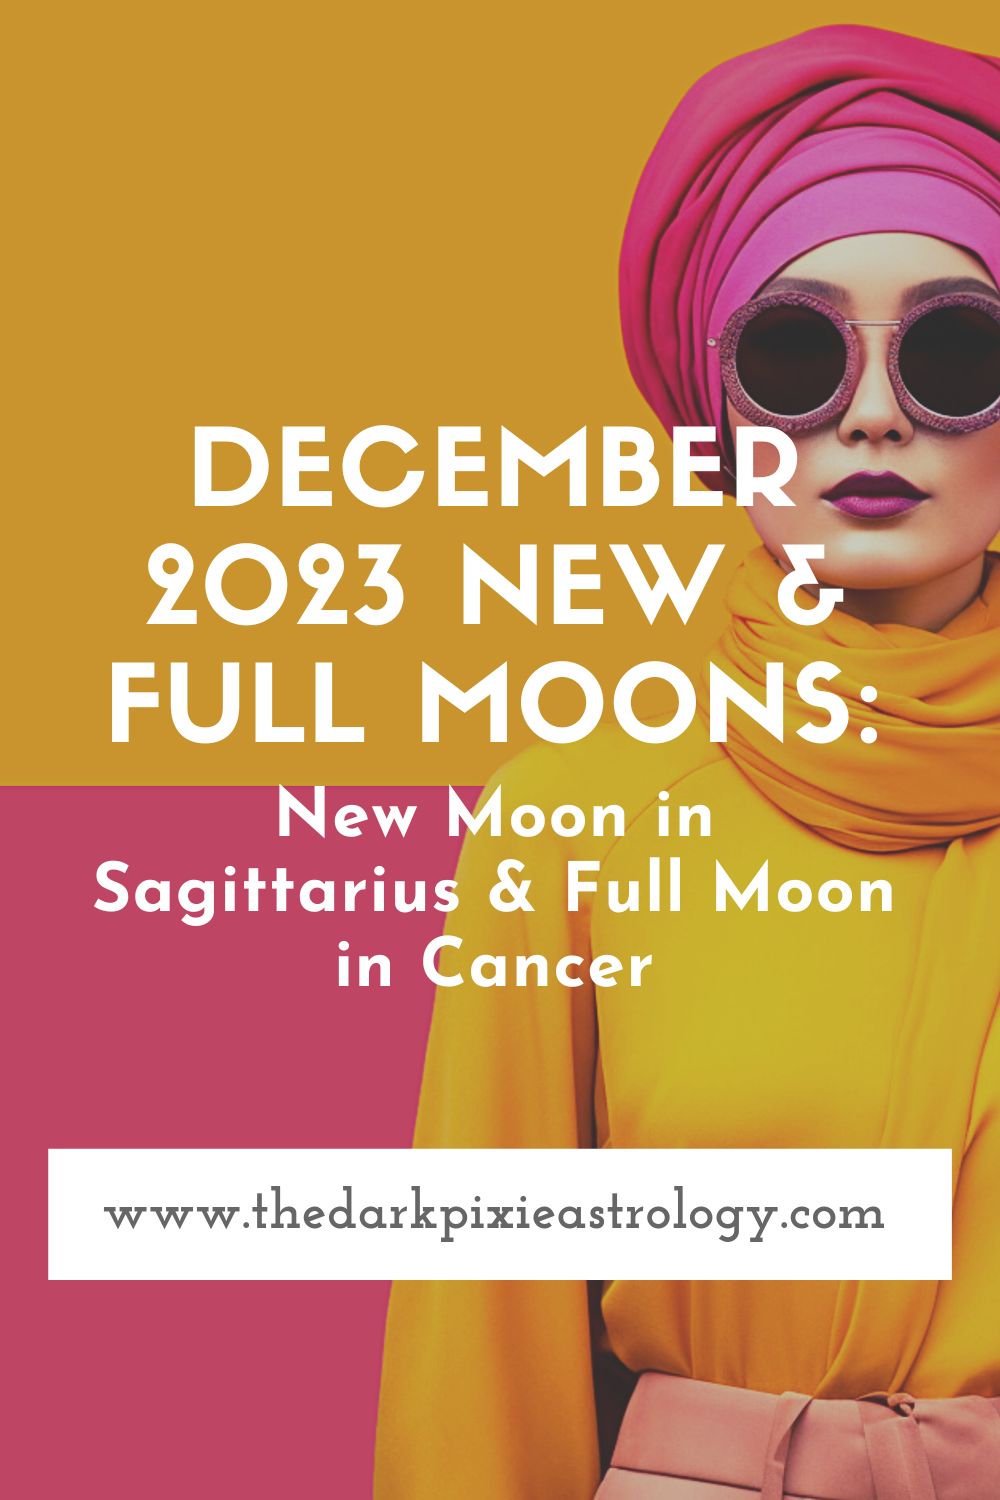 December 2023 New & Full Moons: New Moon in Sagittarius & Full Moon in Cancer - The Dark Pixie Astrology